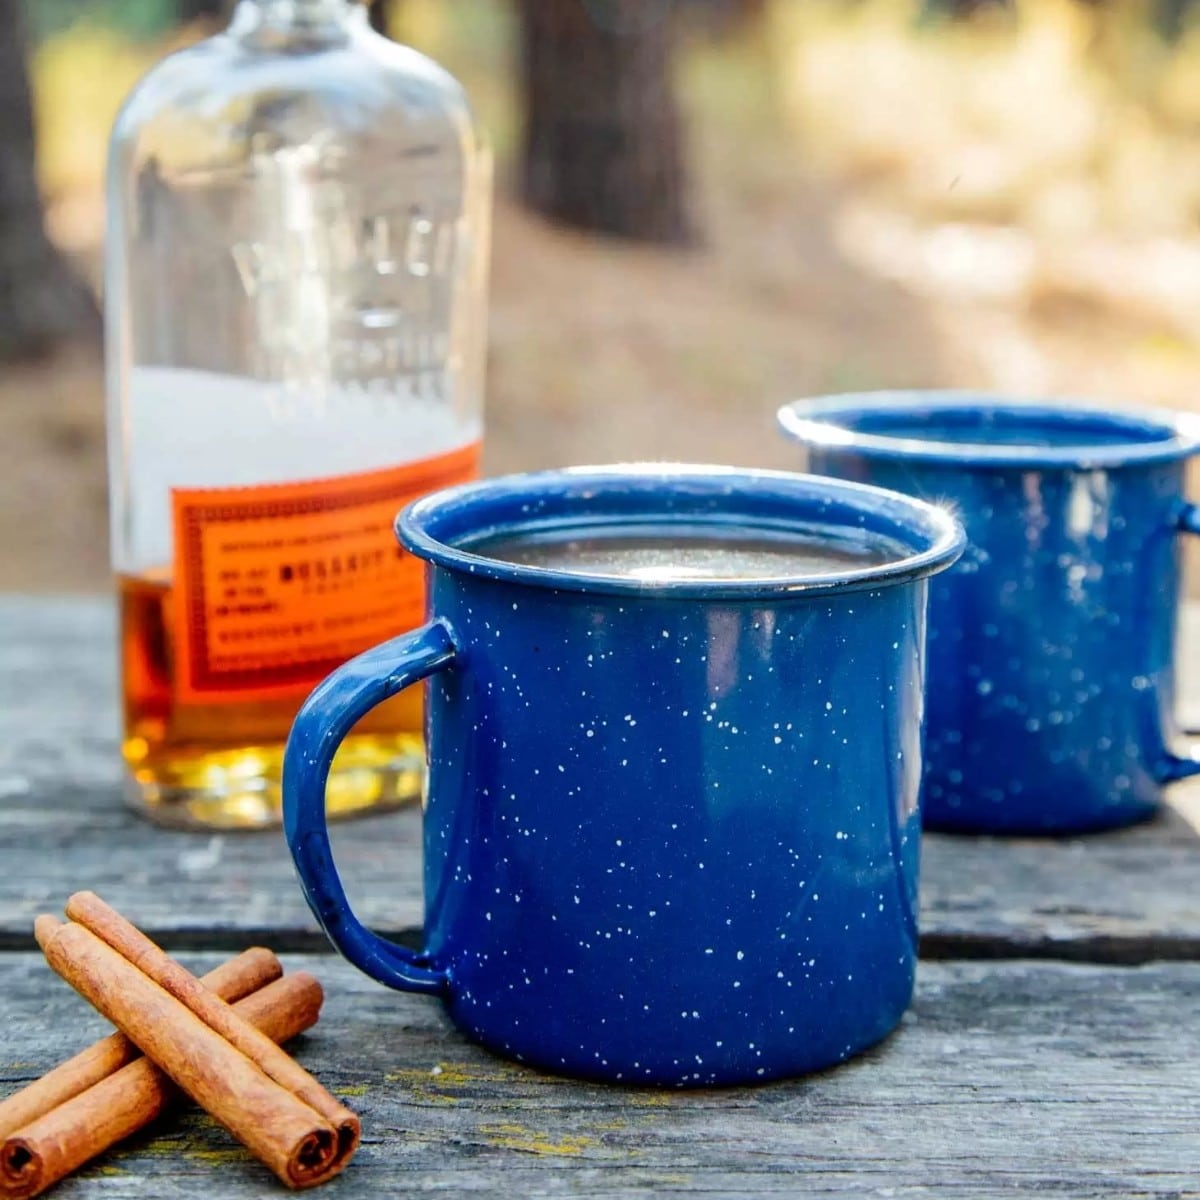 A blue enamel mug next to a bottle of whiskey